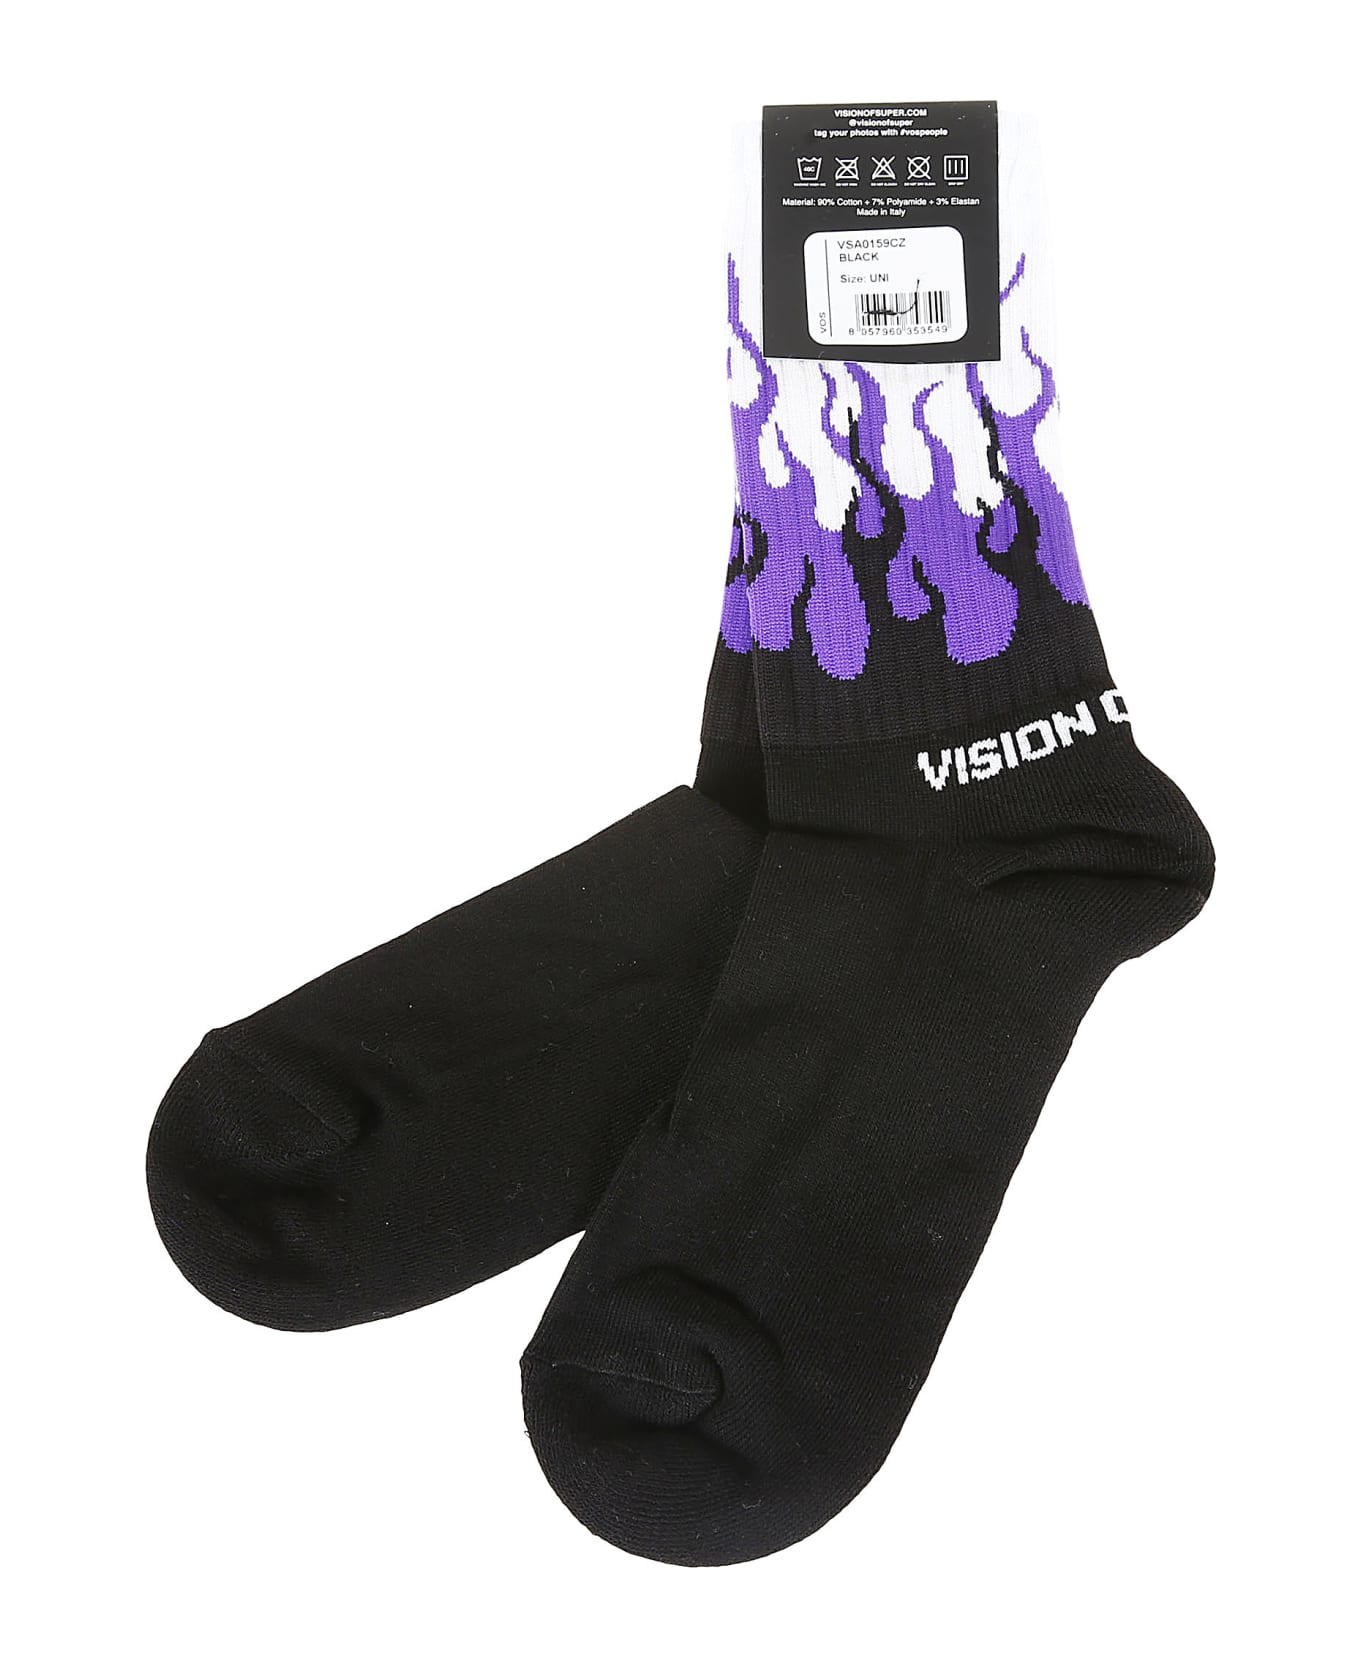 Vision of Super Black Purple Double Flames Socks - Black Purple